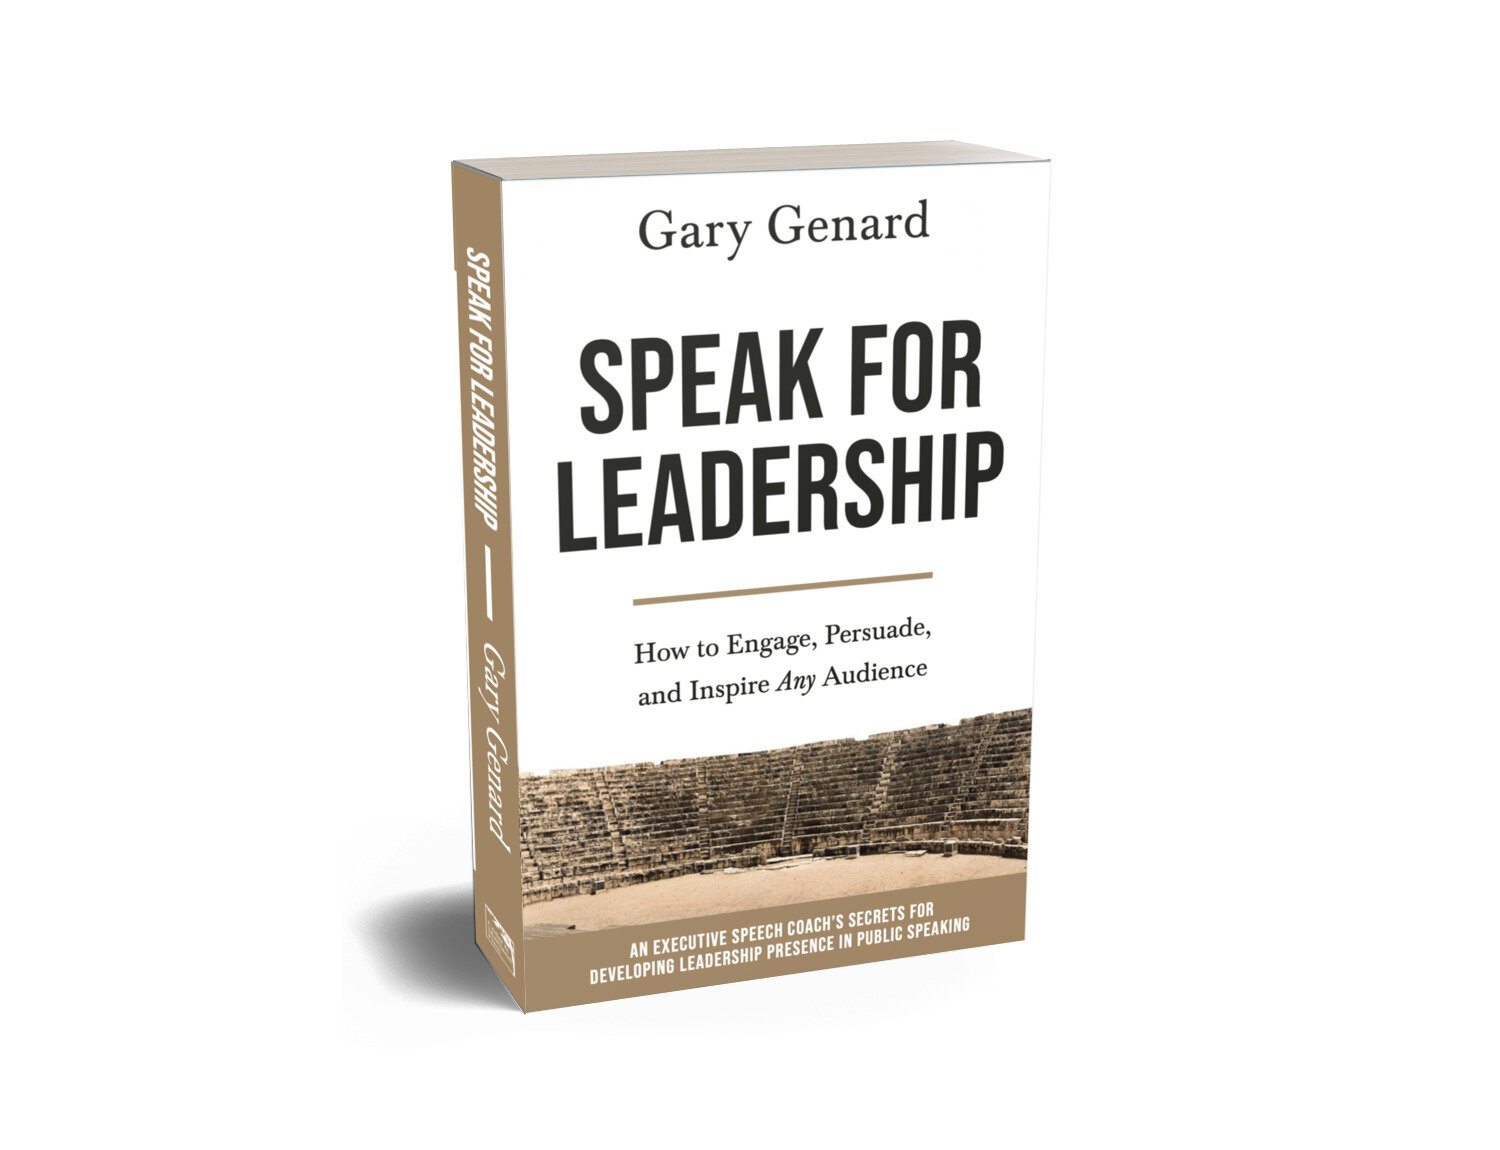 Dr. Gary Genard's leadership book, Speak for Leadership.